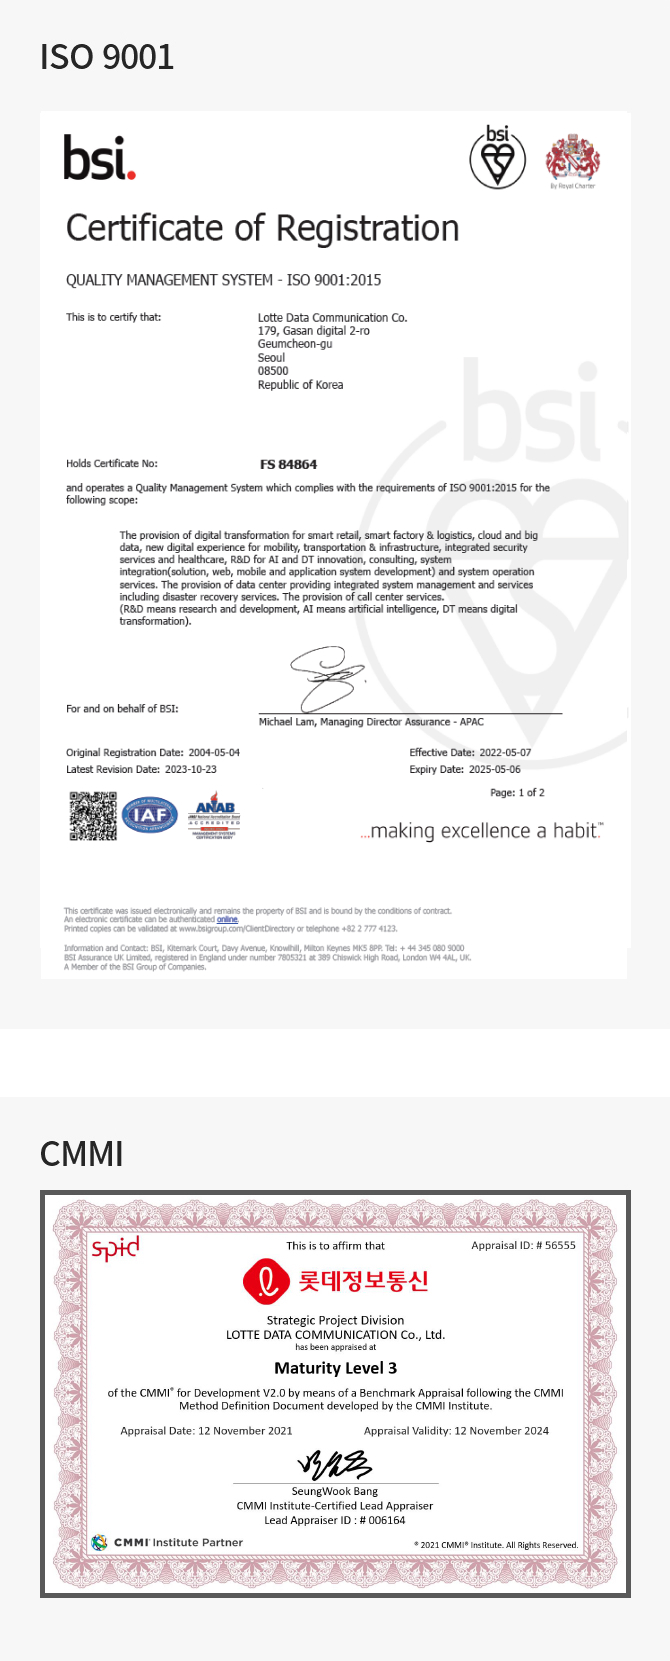 ISO 9001, CMMI 자격증